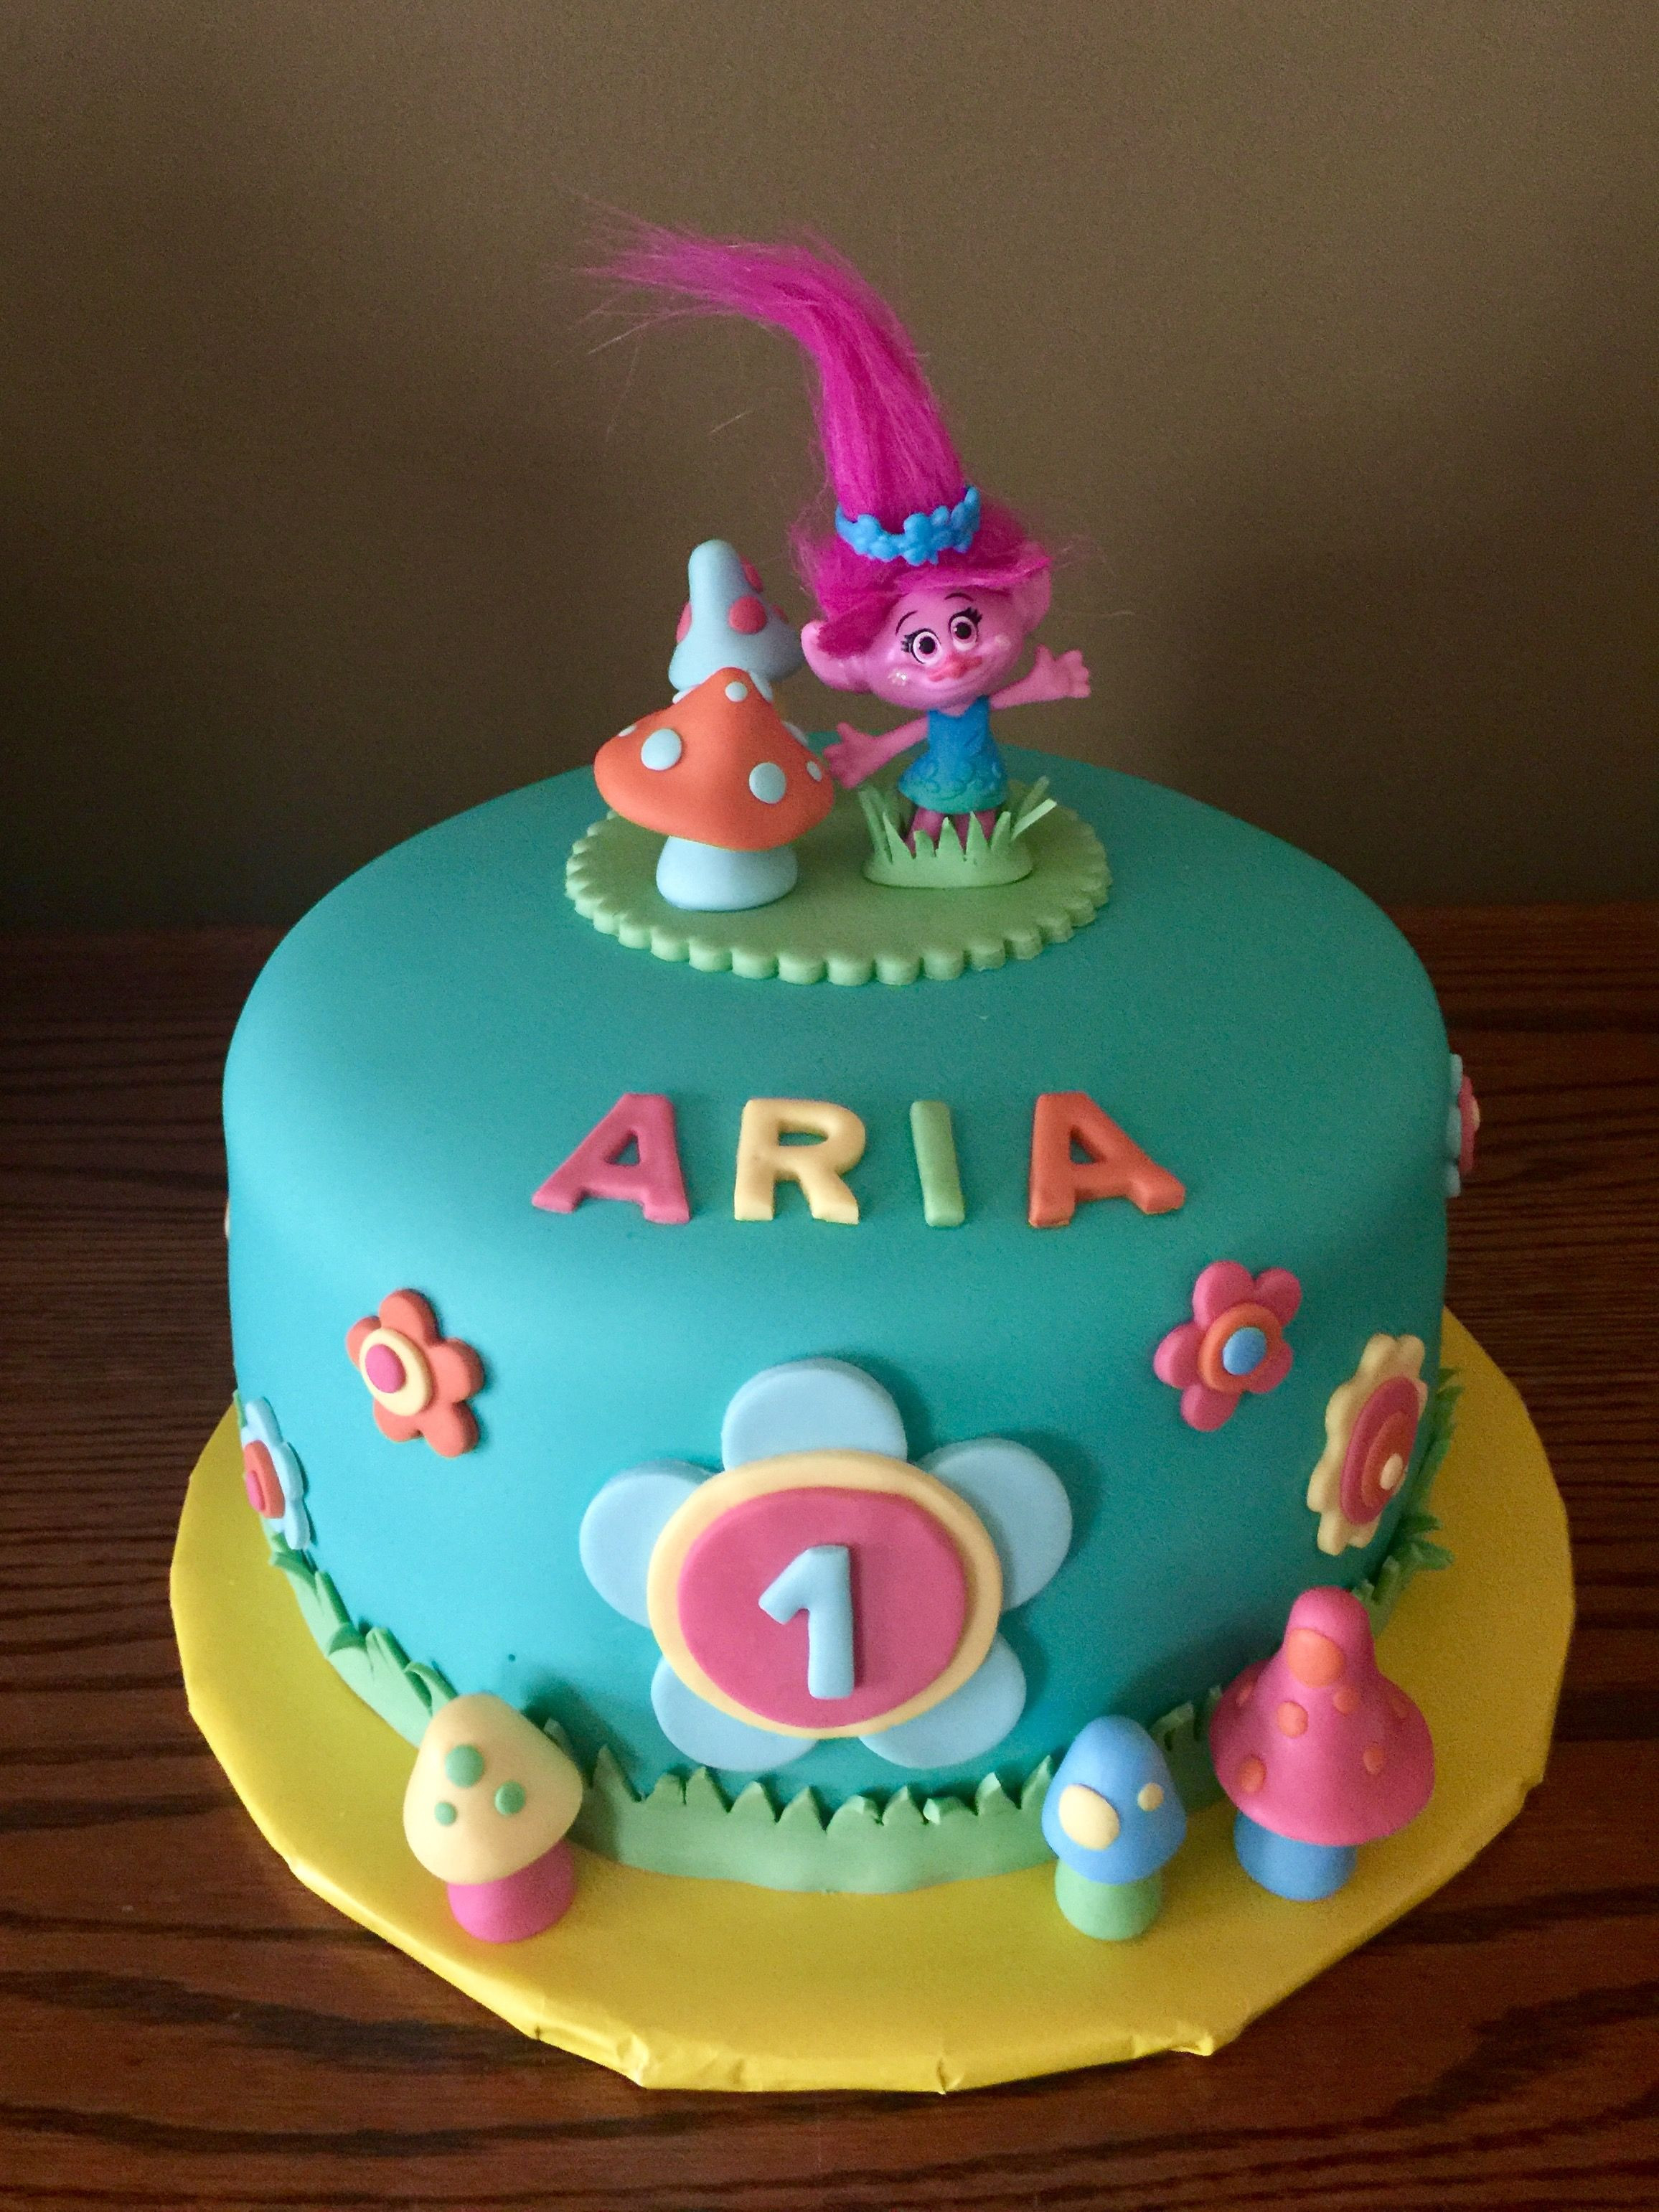 Best ideas about Poppy Troll Birthday Cake
. Save or Pin Trolls Princess Poppy Cake Now.